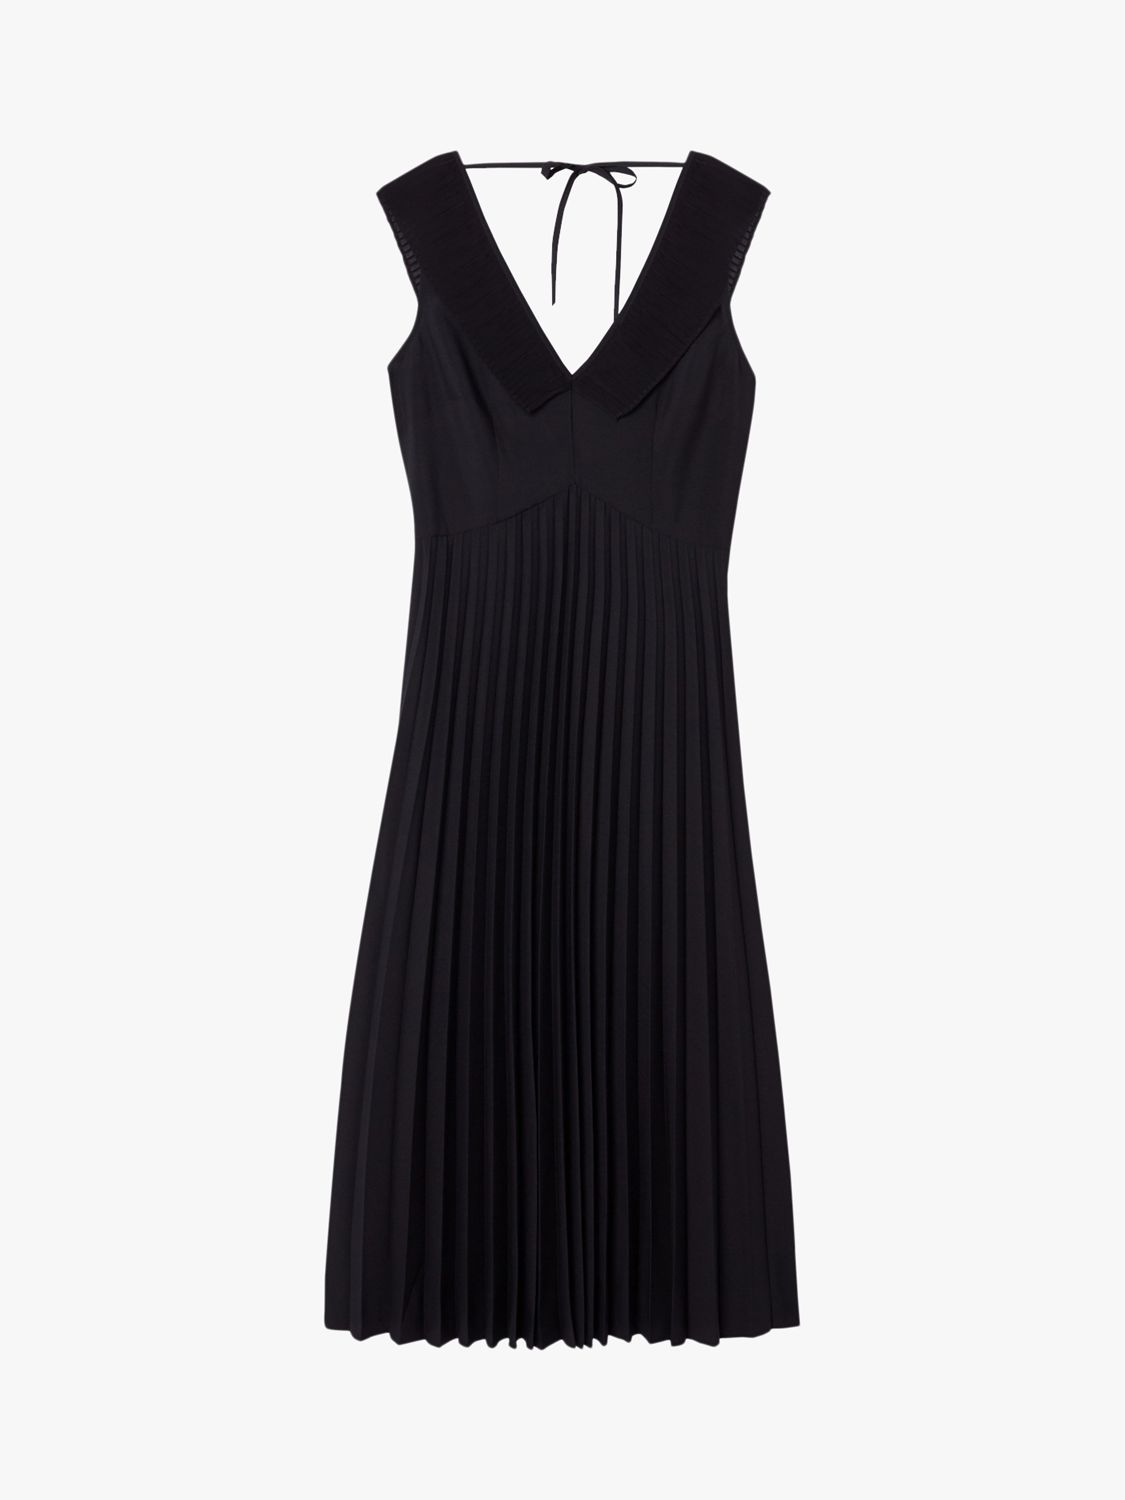 Warehouse Pleated V-Neck Dress, Black